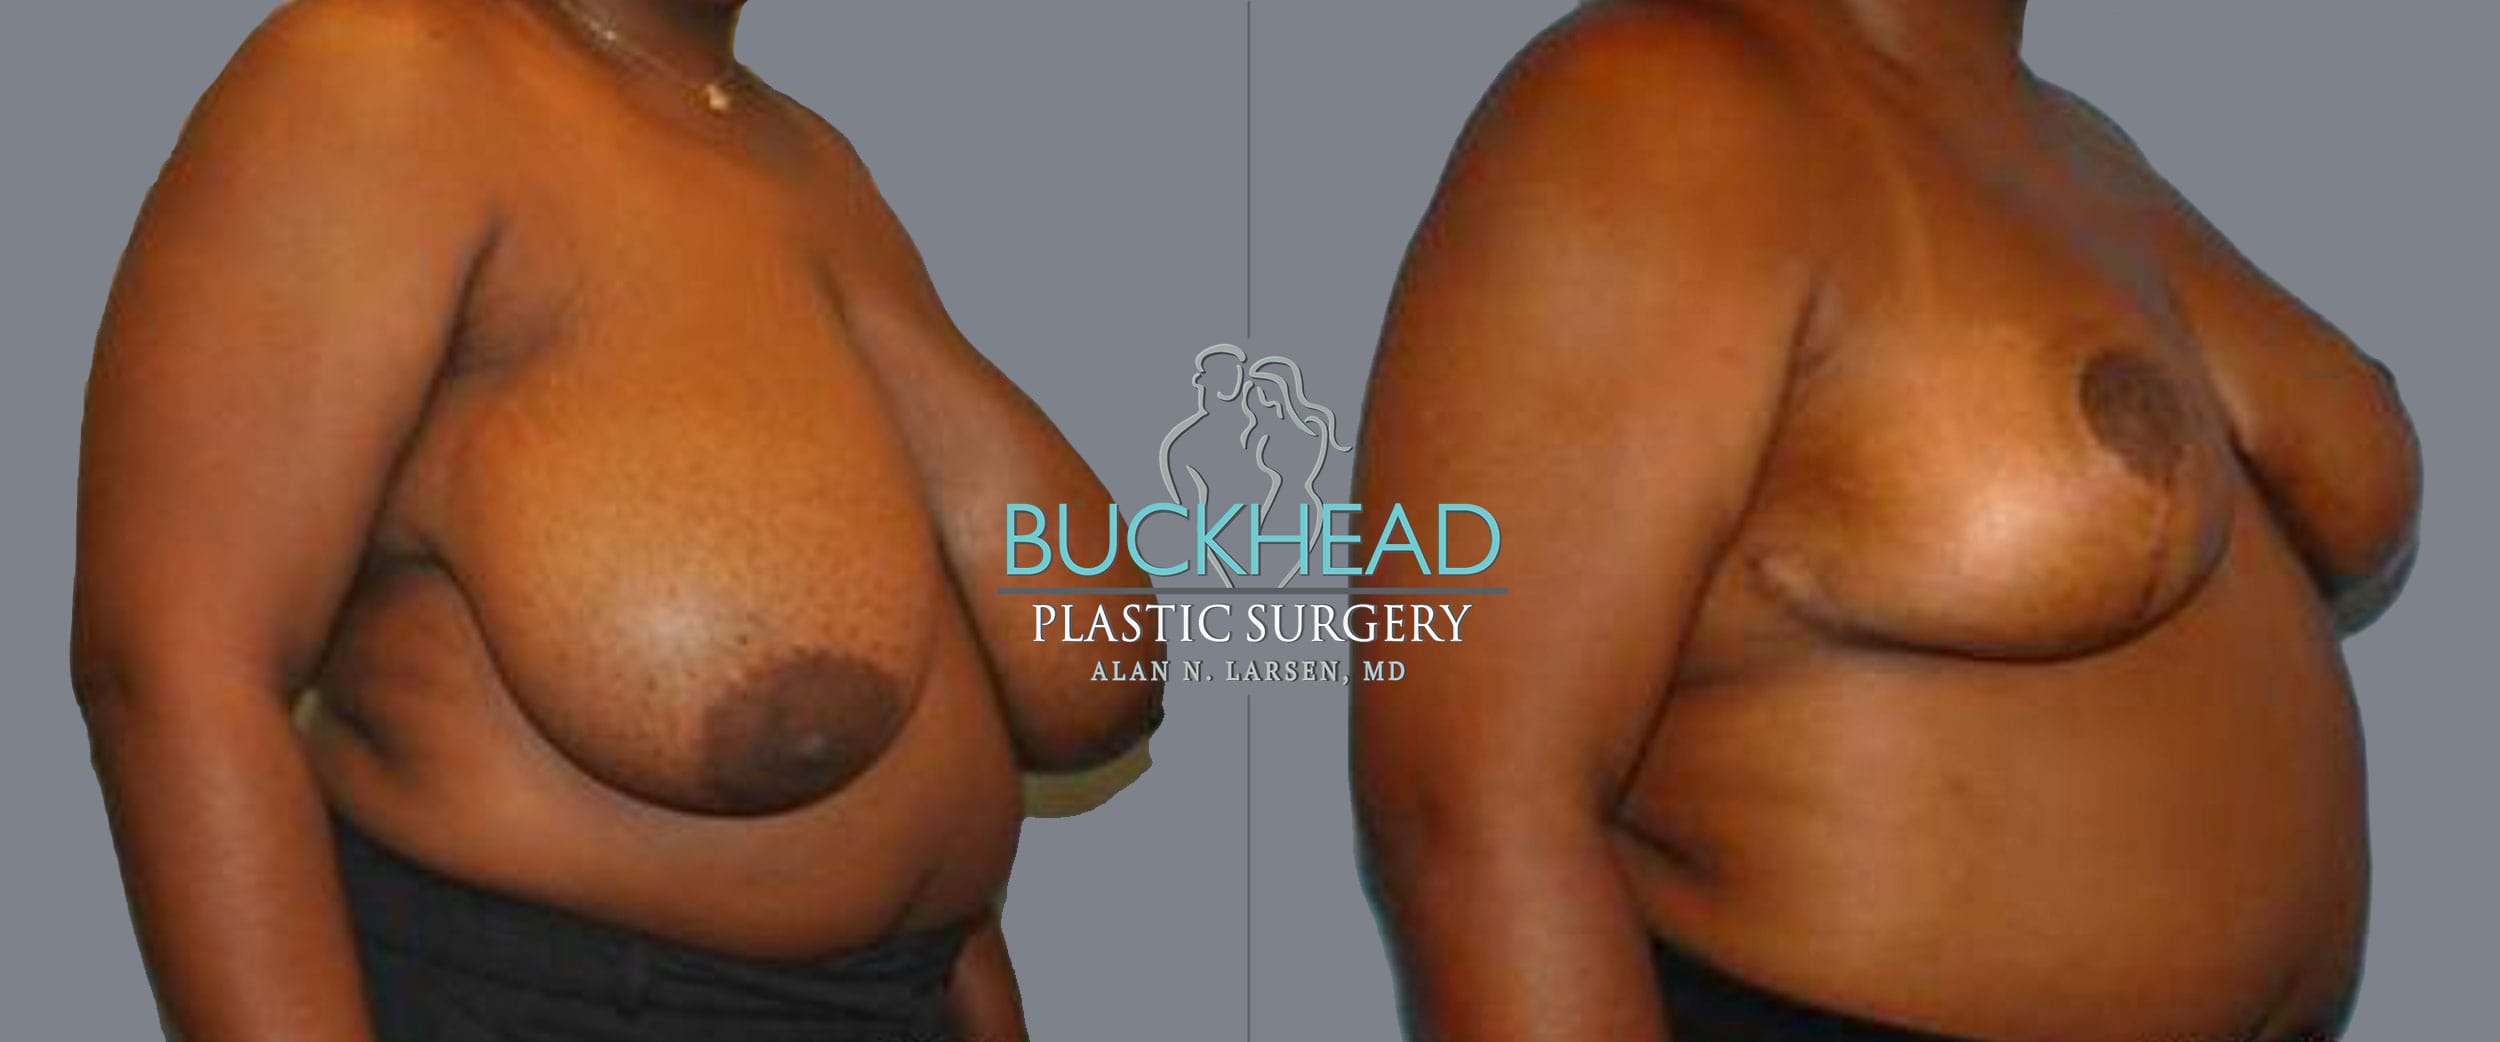 Before and After Photo Gallery | Breast Reduction | Buckhead Plastic Surgery | Alan N. Larsen, MD | Board-Certified Plastic Surgeon | Atlanta GA